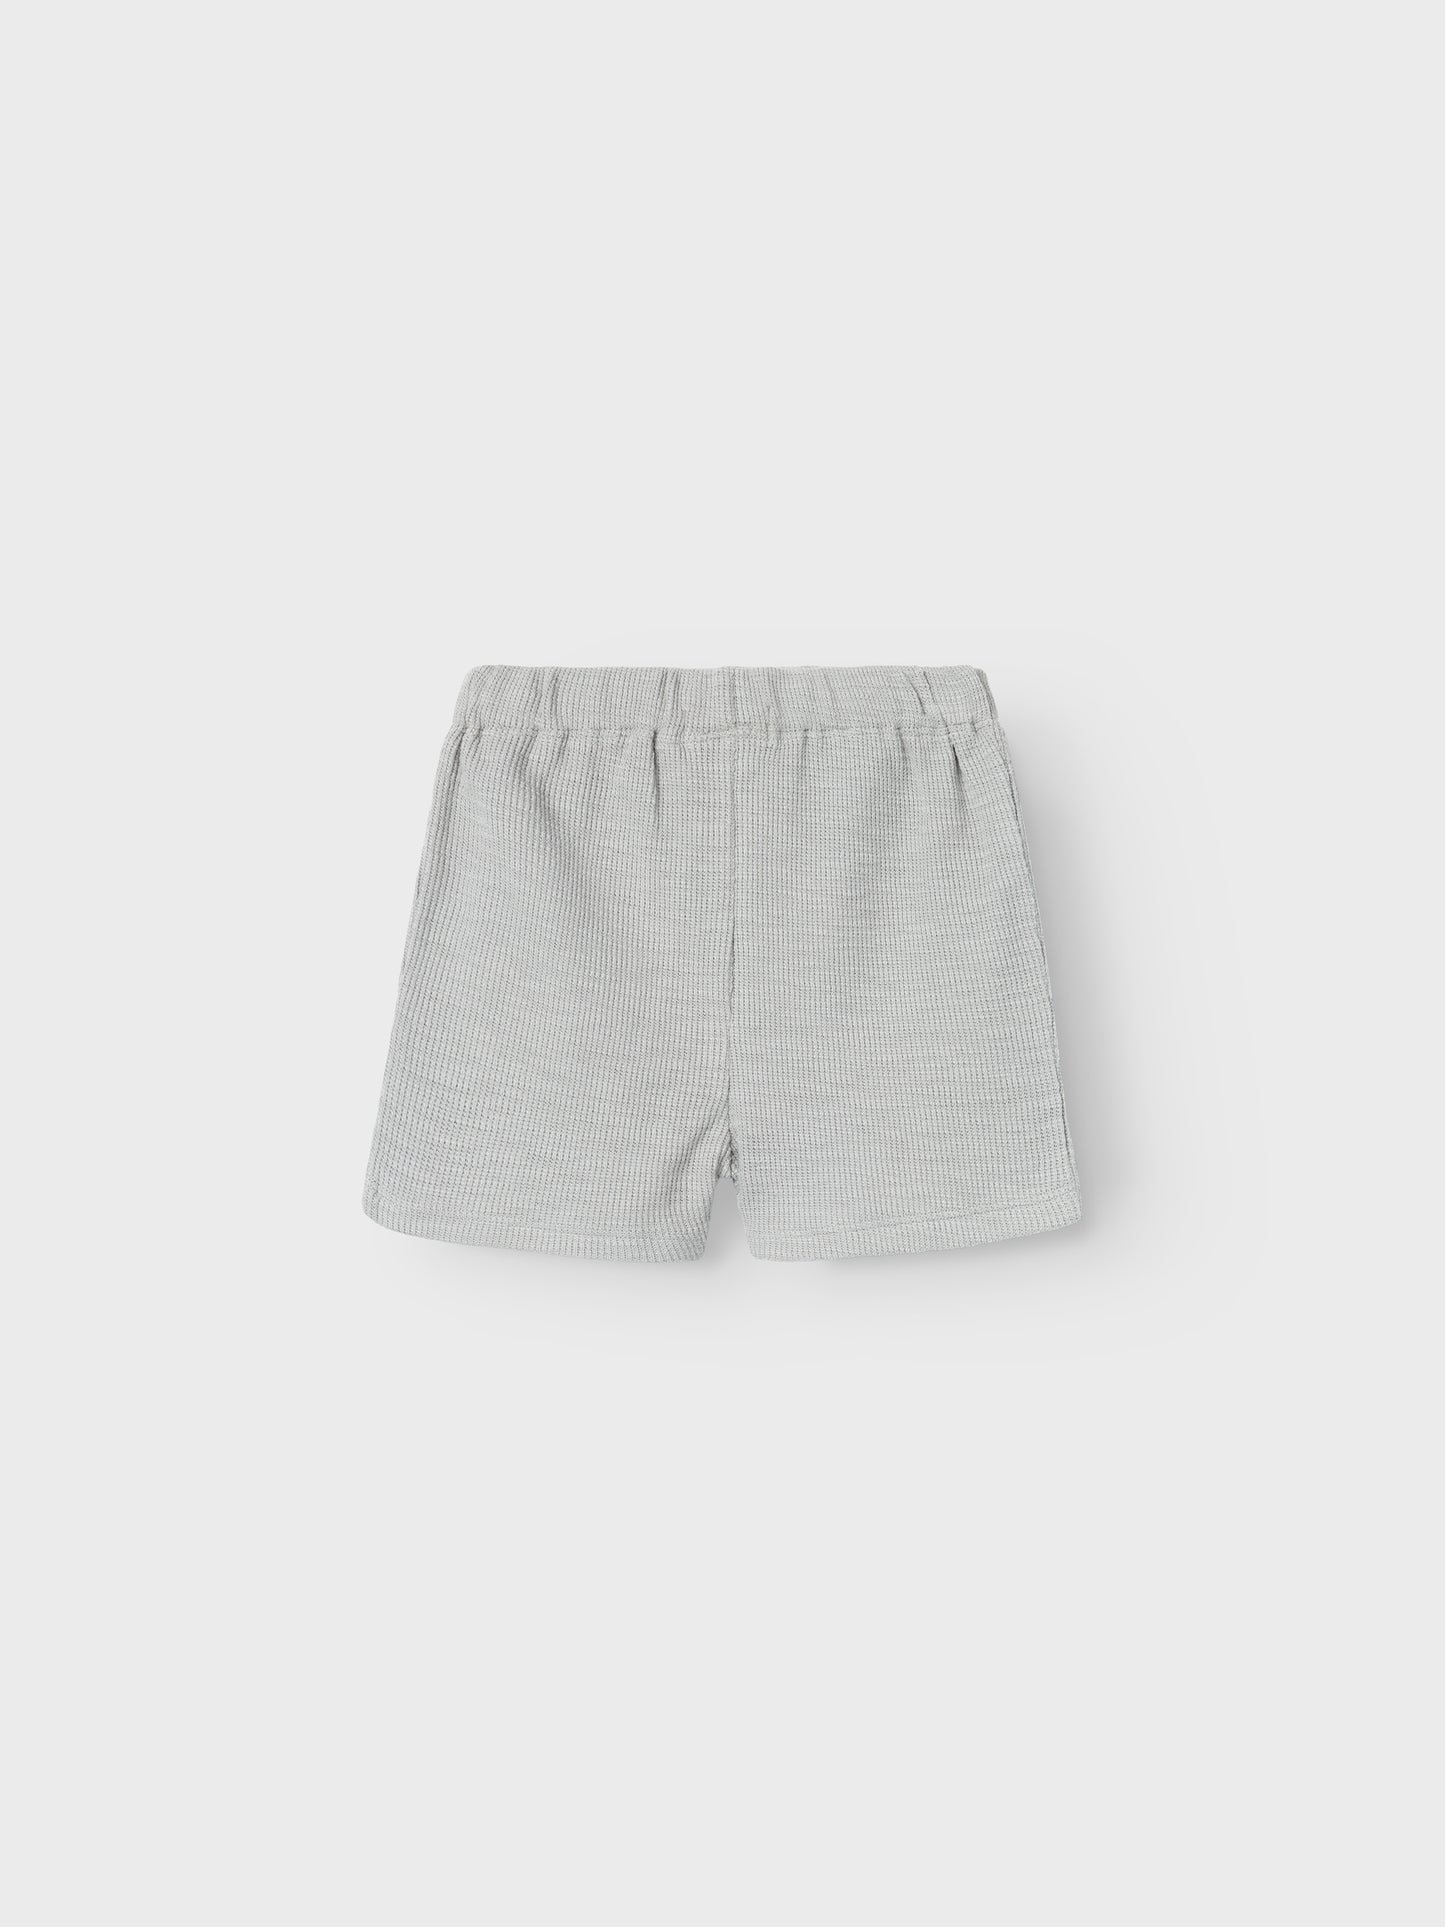 Lil atelier - Honjo shorts - Limestone